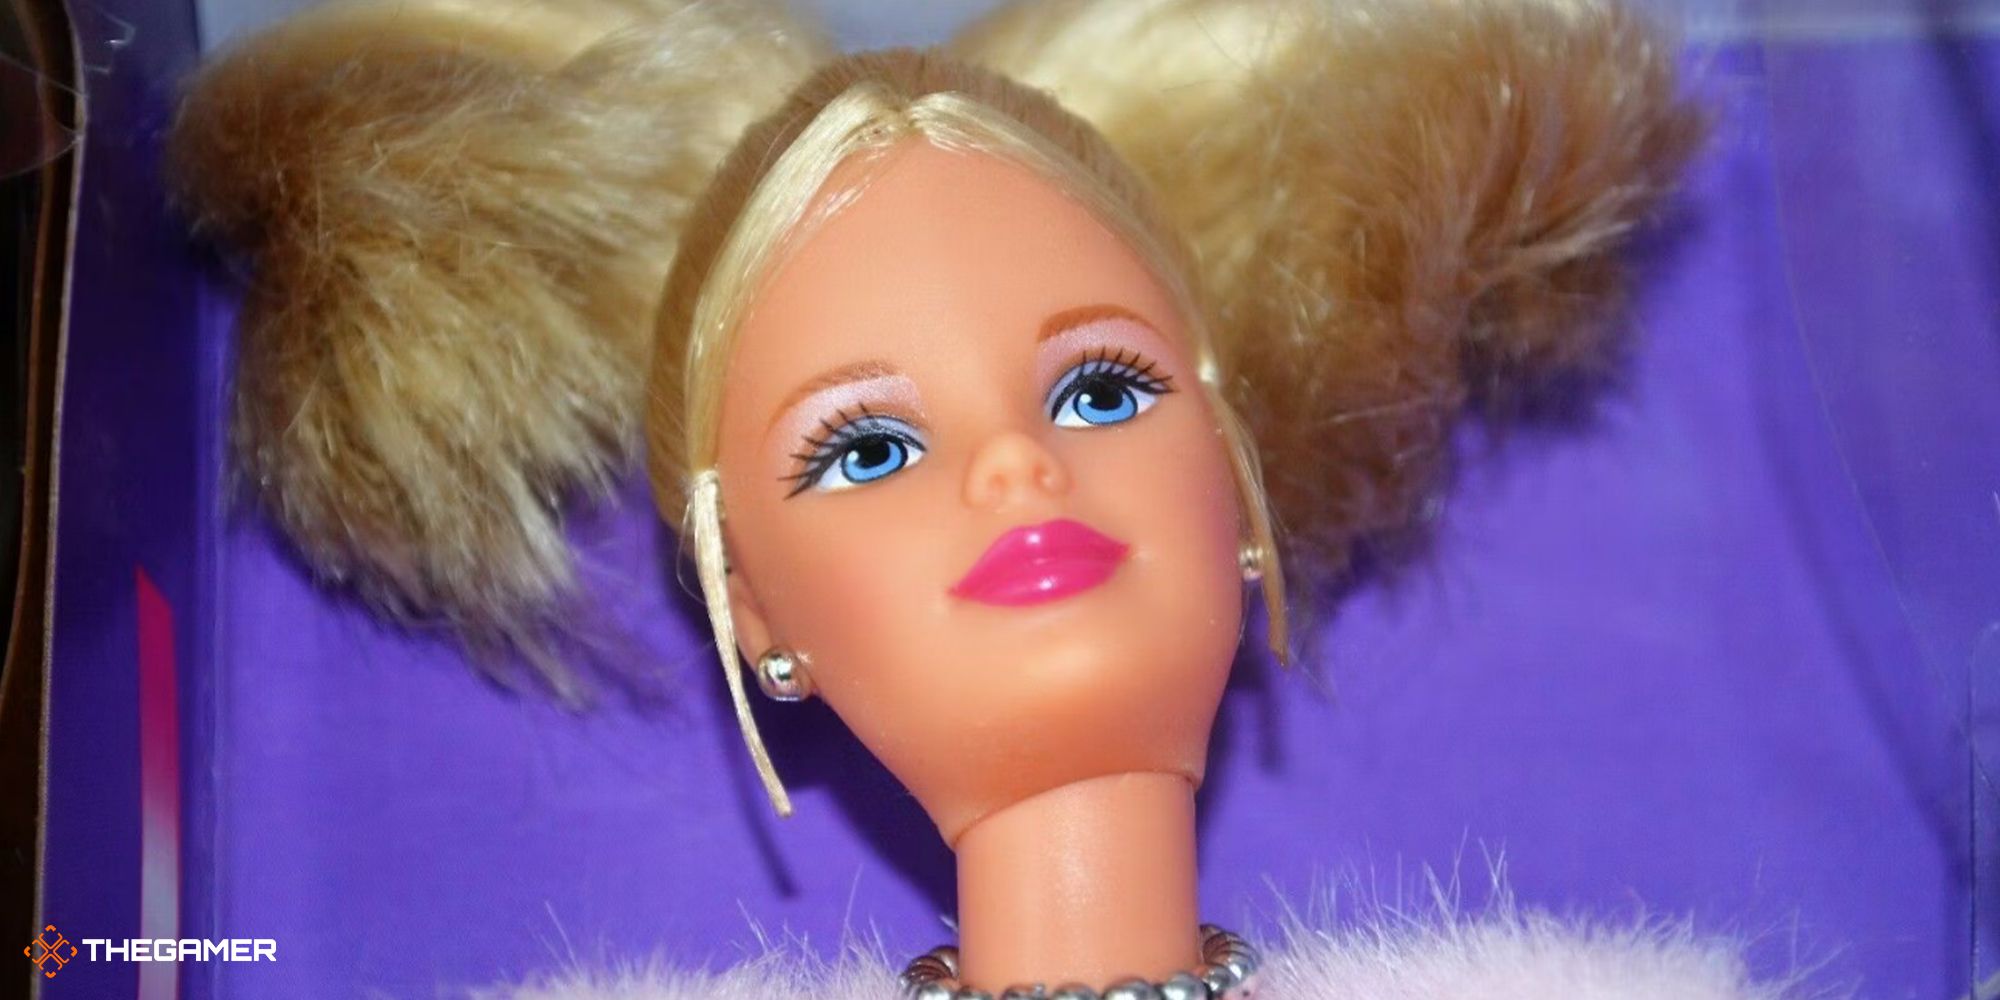 Galeries Lafayette Blonde Barbie Doll